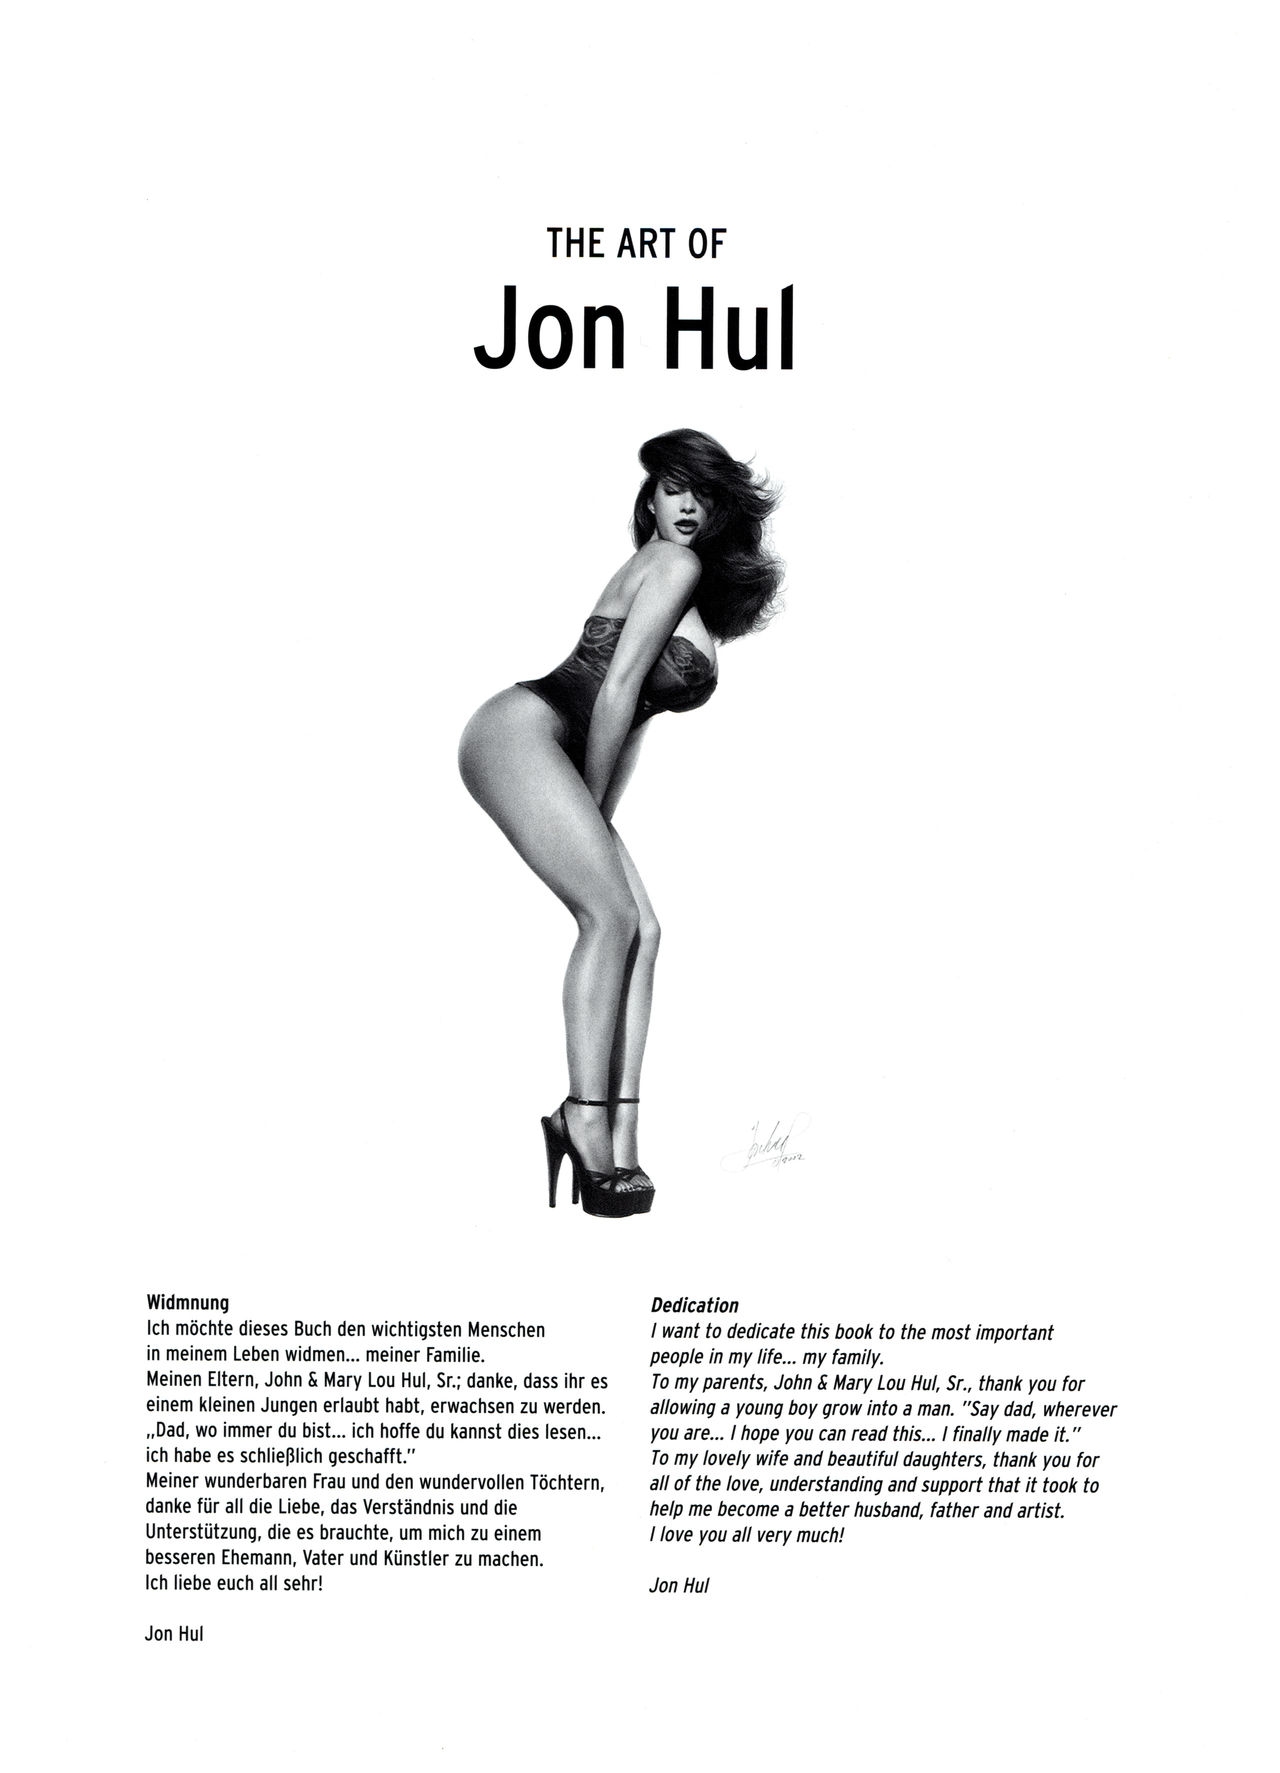 [Jon Hul] Art Fantastix #12 - The Art of Jon Hul 2